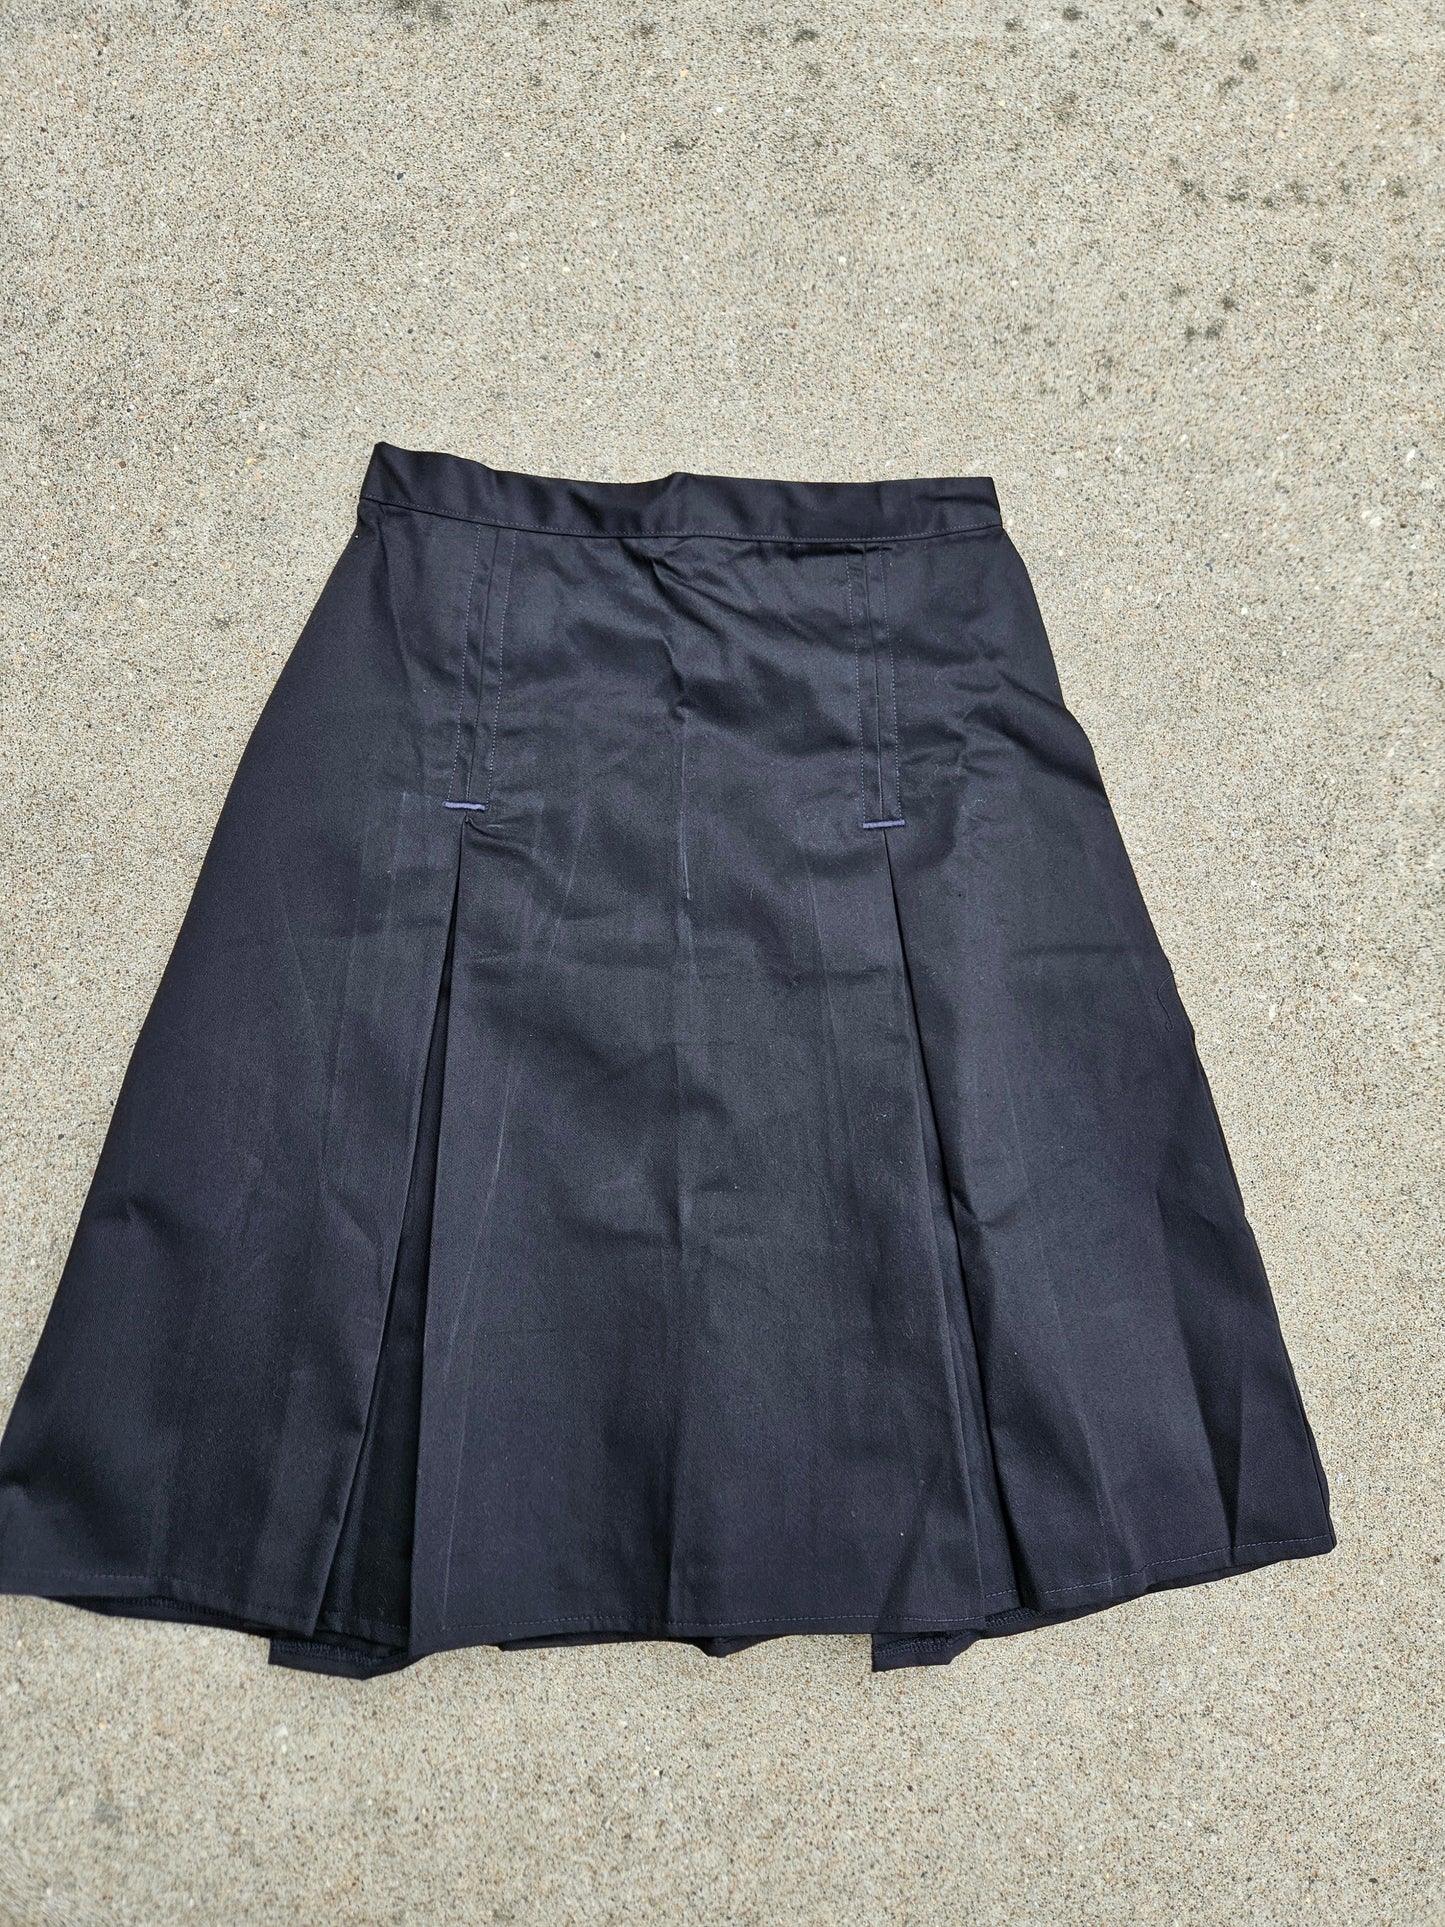 Adult Modest Pleated Uniform Skirt Black Twill Size 12